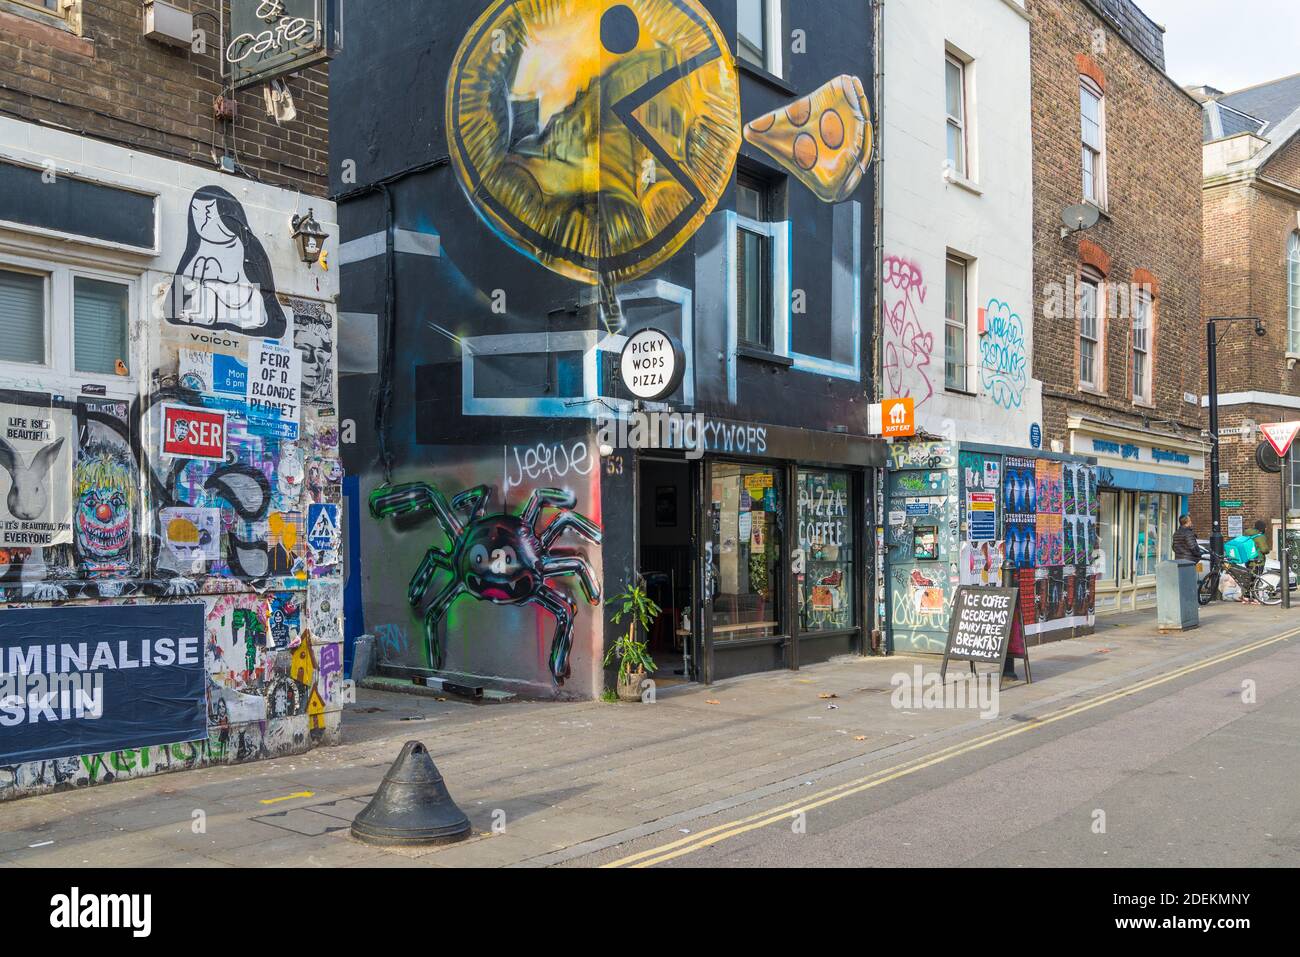 Picky Wops pizza shop in Brick Lane, Spitalfields, London, England, UK Stock Photo